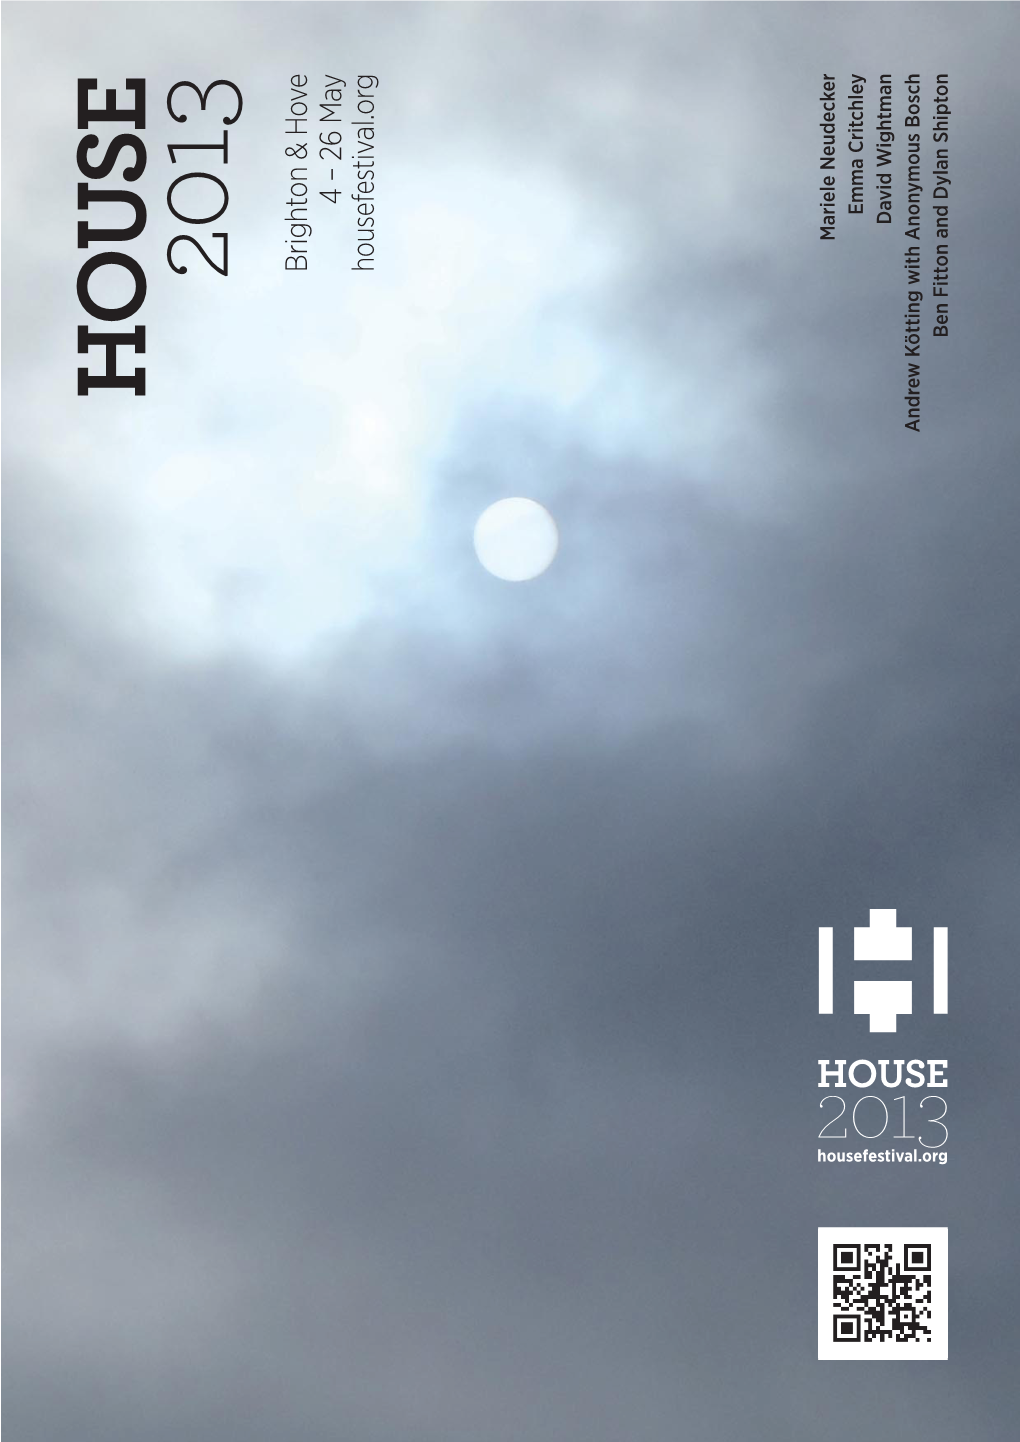 HOUSE 2013 Programme